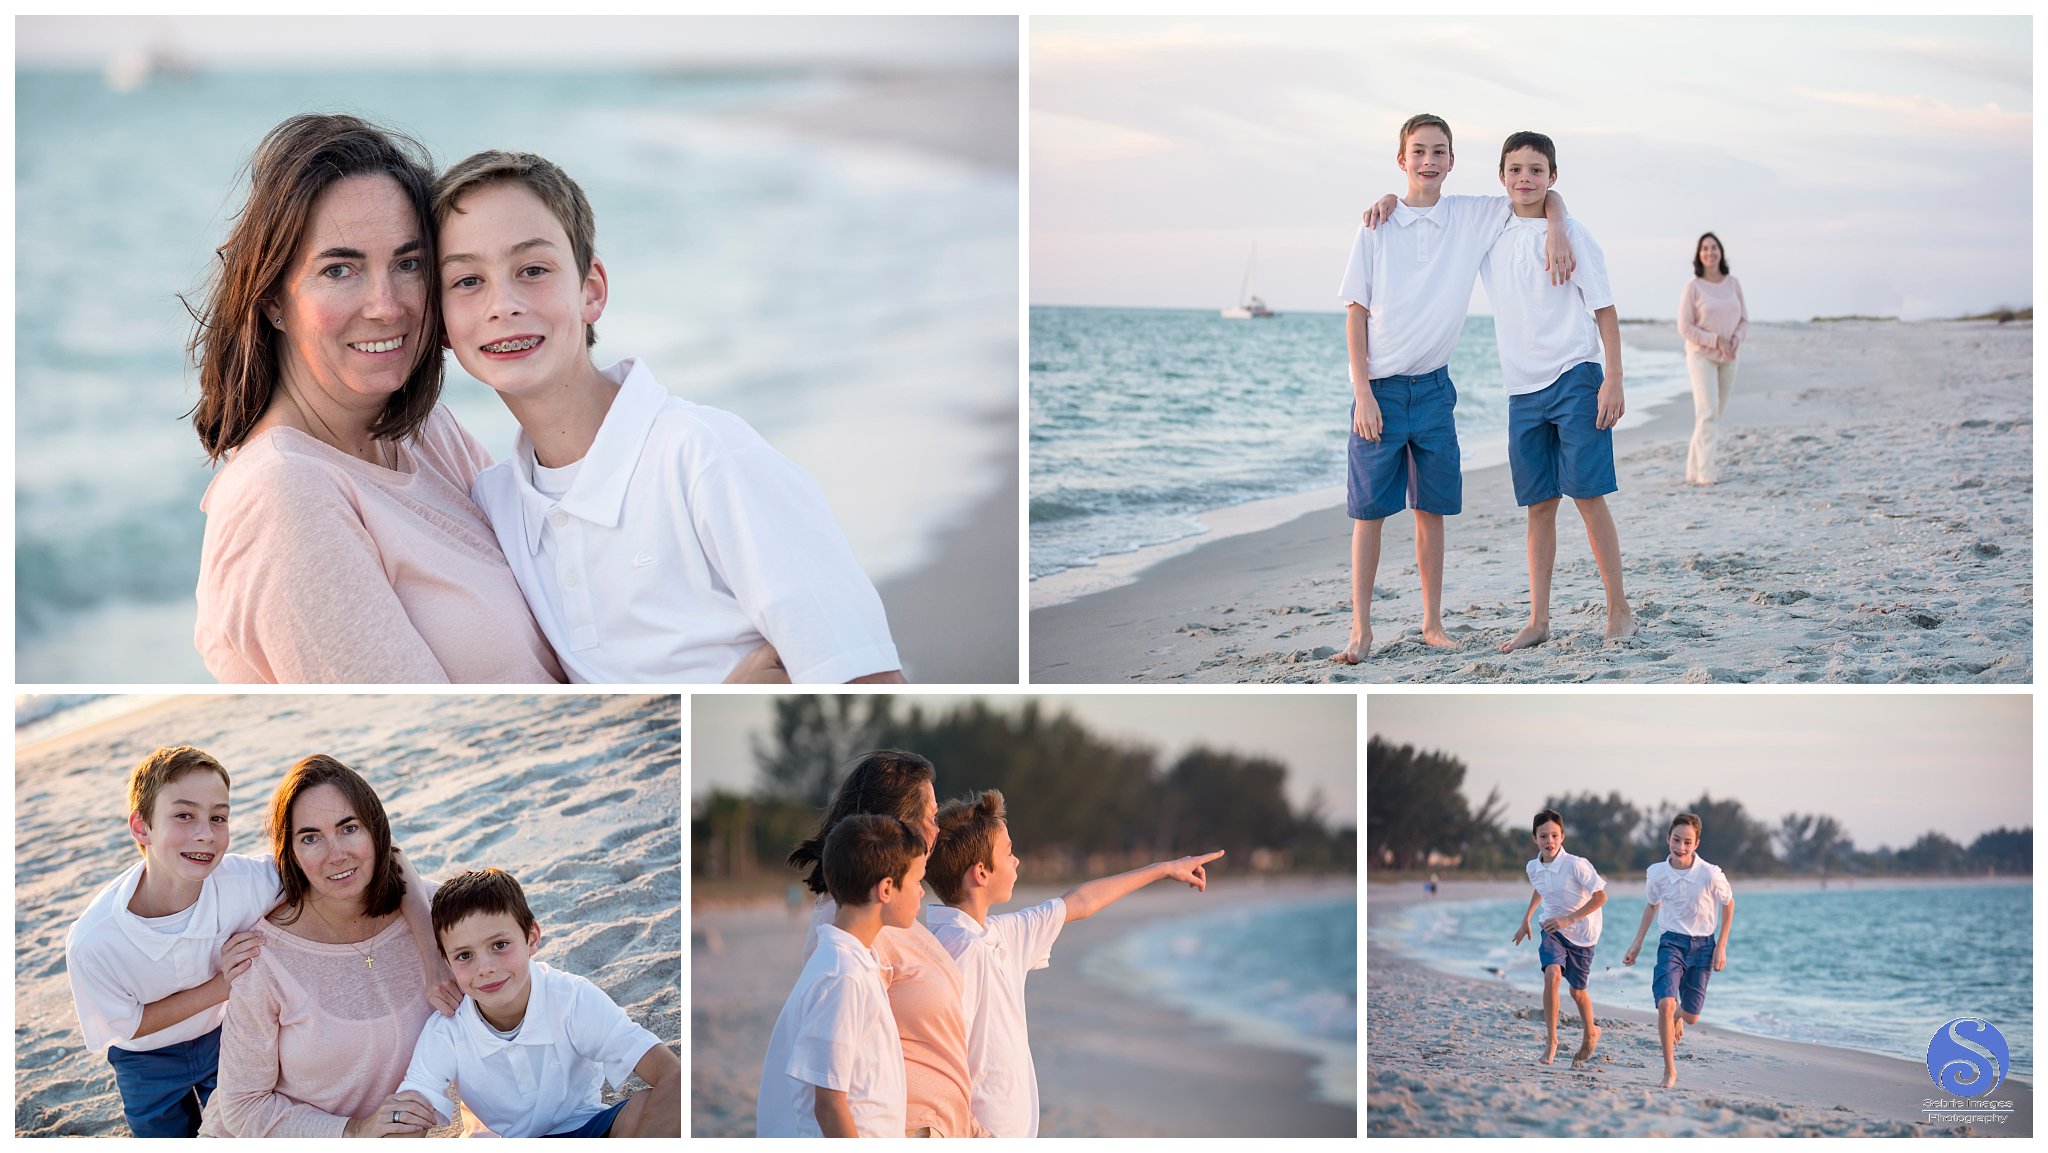 A Beautiful Family Portrait at South Seas Island Resort